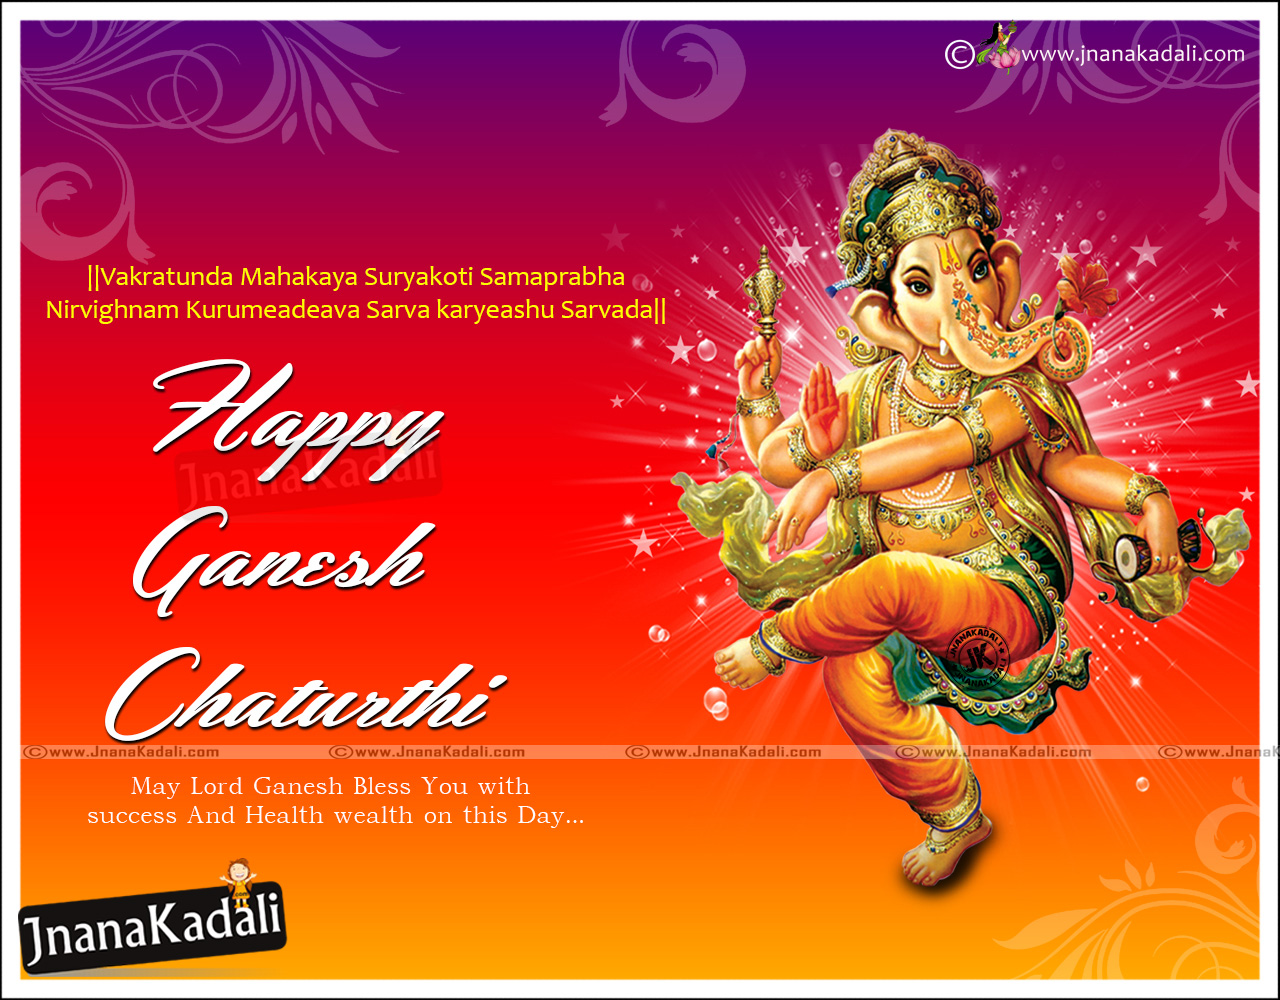 Happy Ganesh Chaturthi wallpapers and images 2016 | JNANA KADALI ...